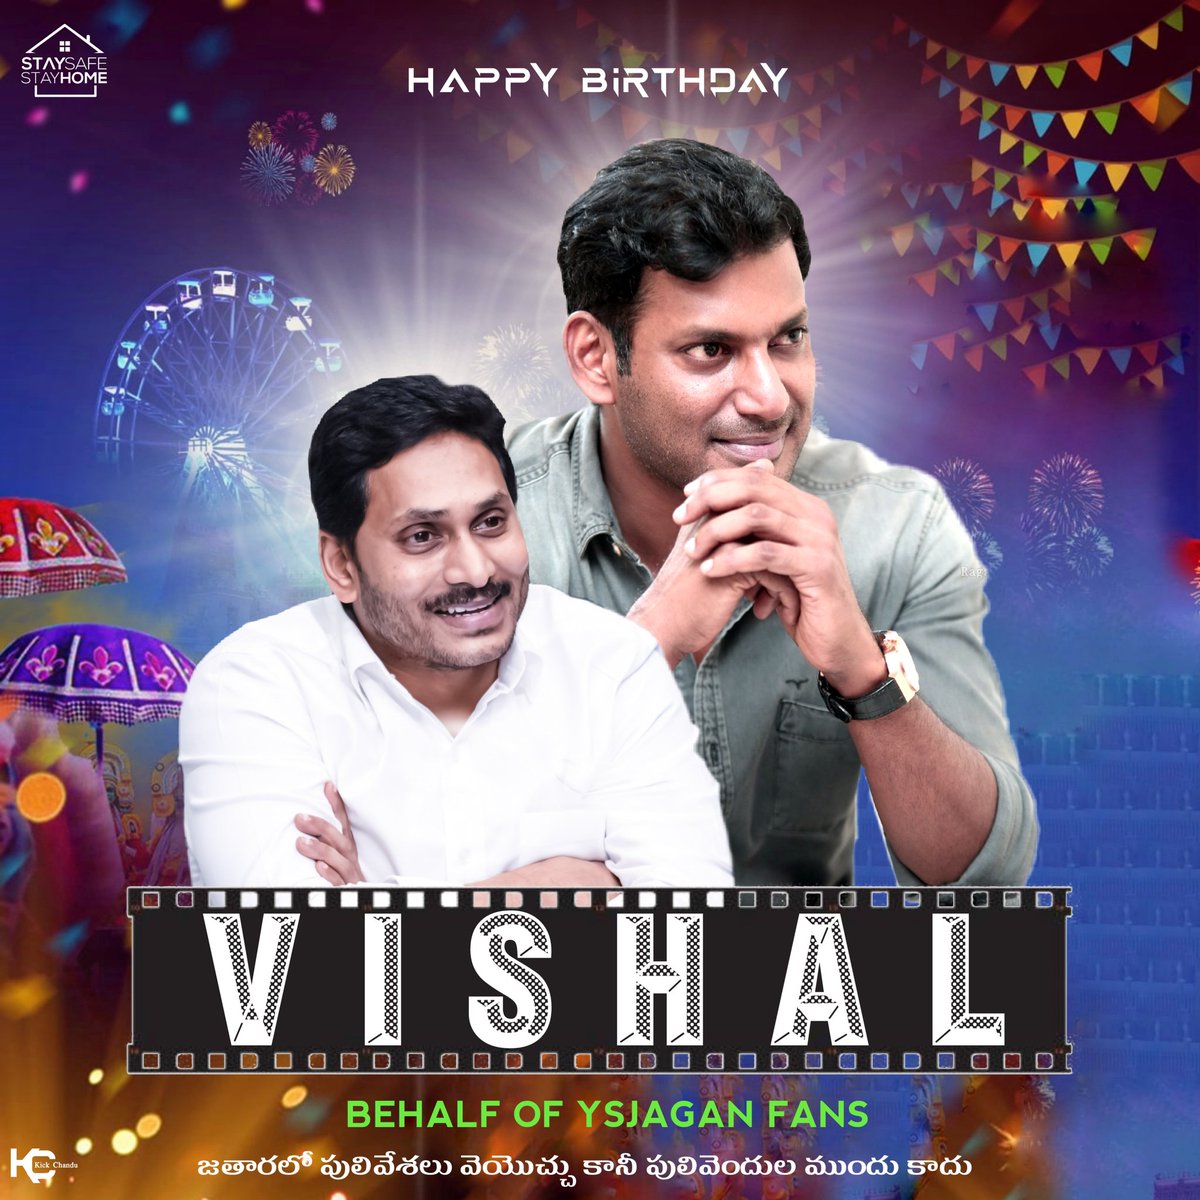 Happy Birthday to our
@VishalKOfficial  behalf of @ysjagan
Fans #YSJaganFans 
#HappyBirthdayVishal ! #VishalBdayCDP #Vishal